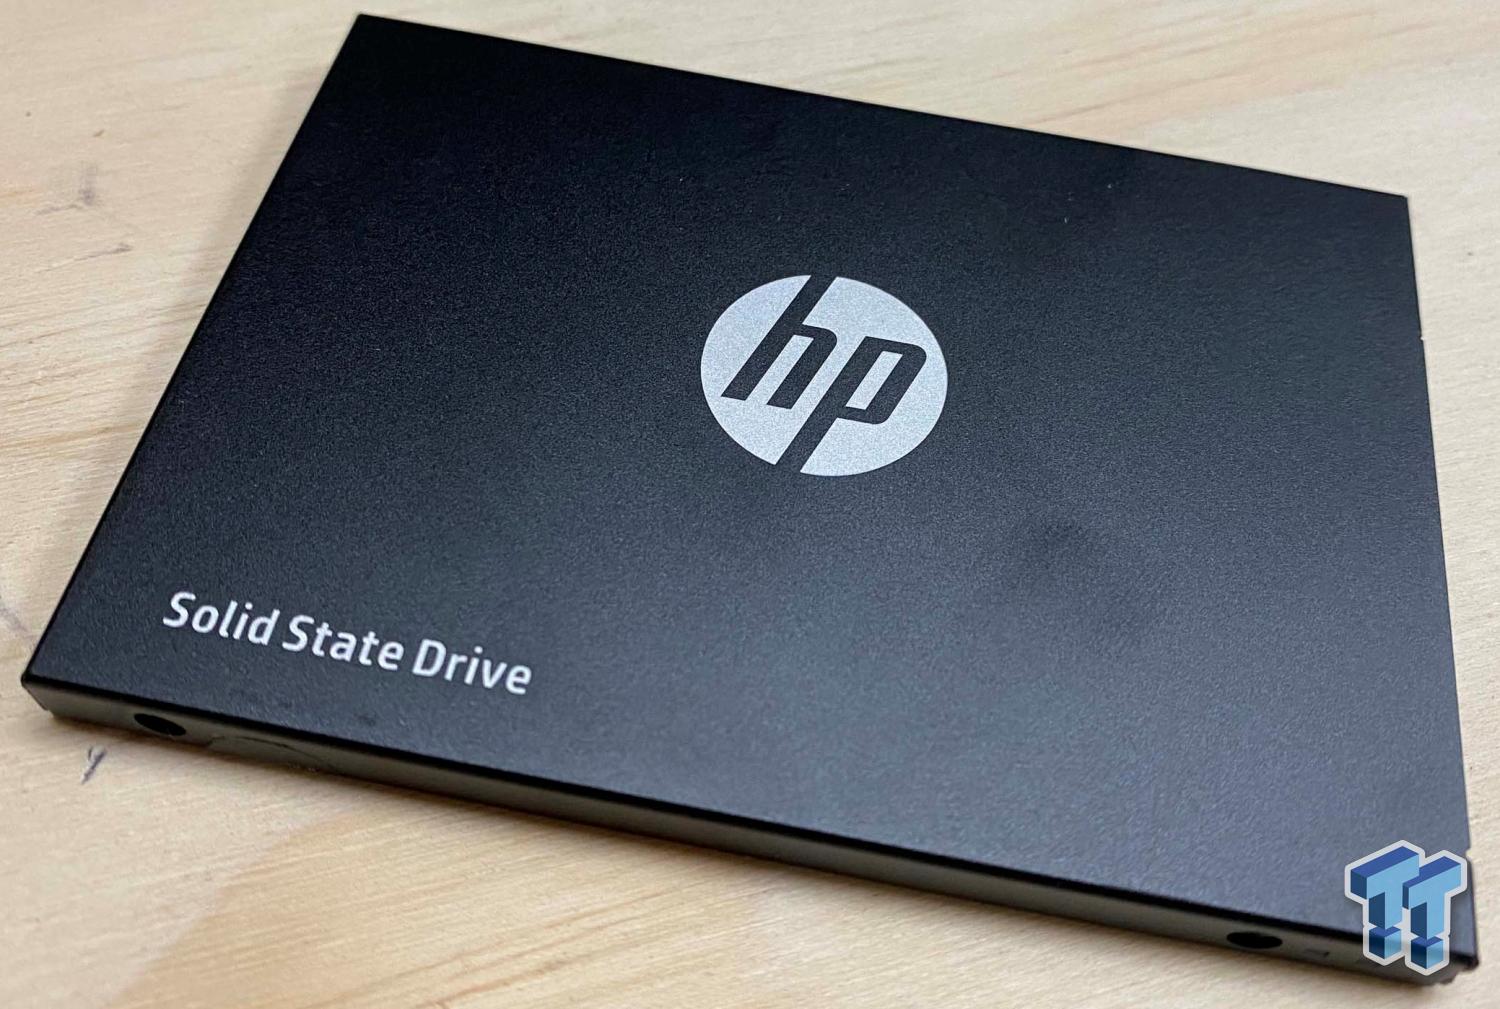 HP S750 1TB SATA SSD Review